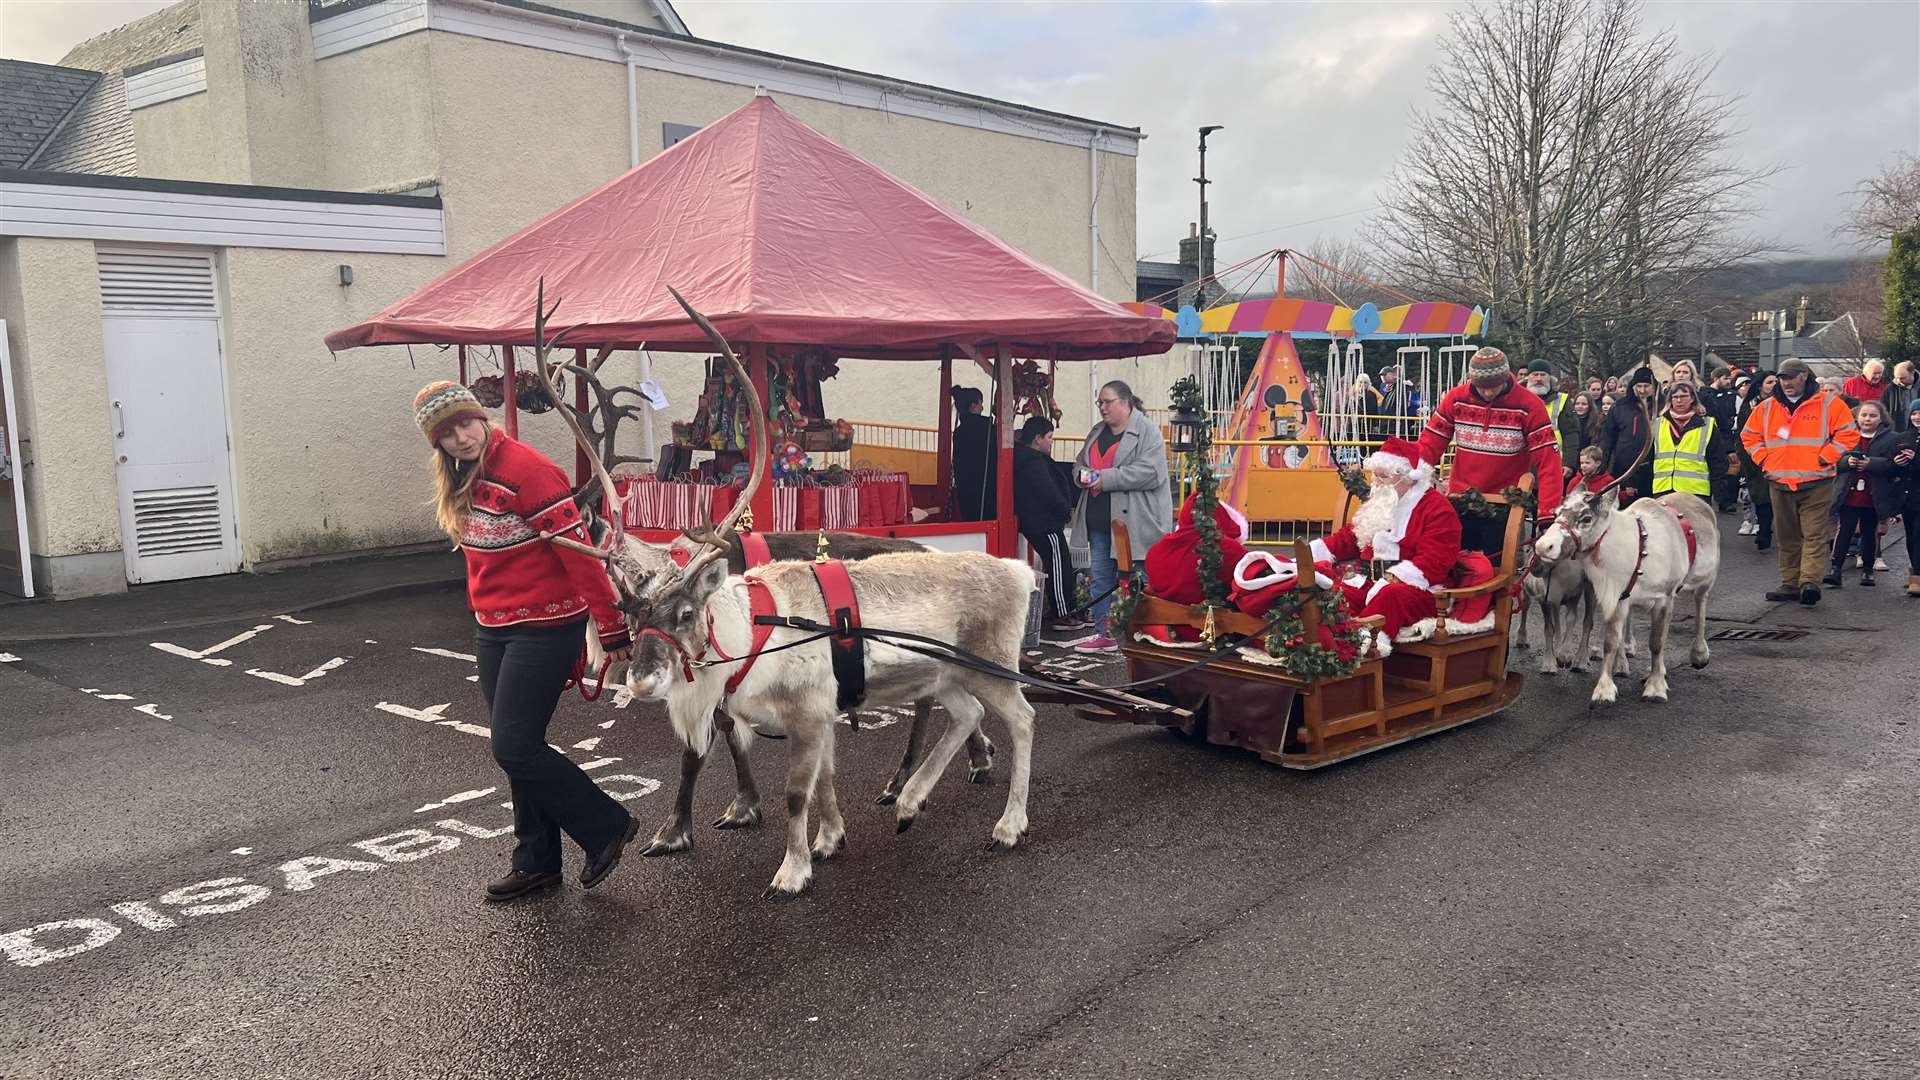 Santa's sleigh journey lasted around 30 minutes.